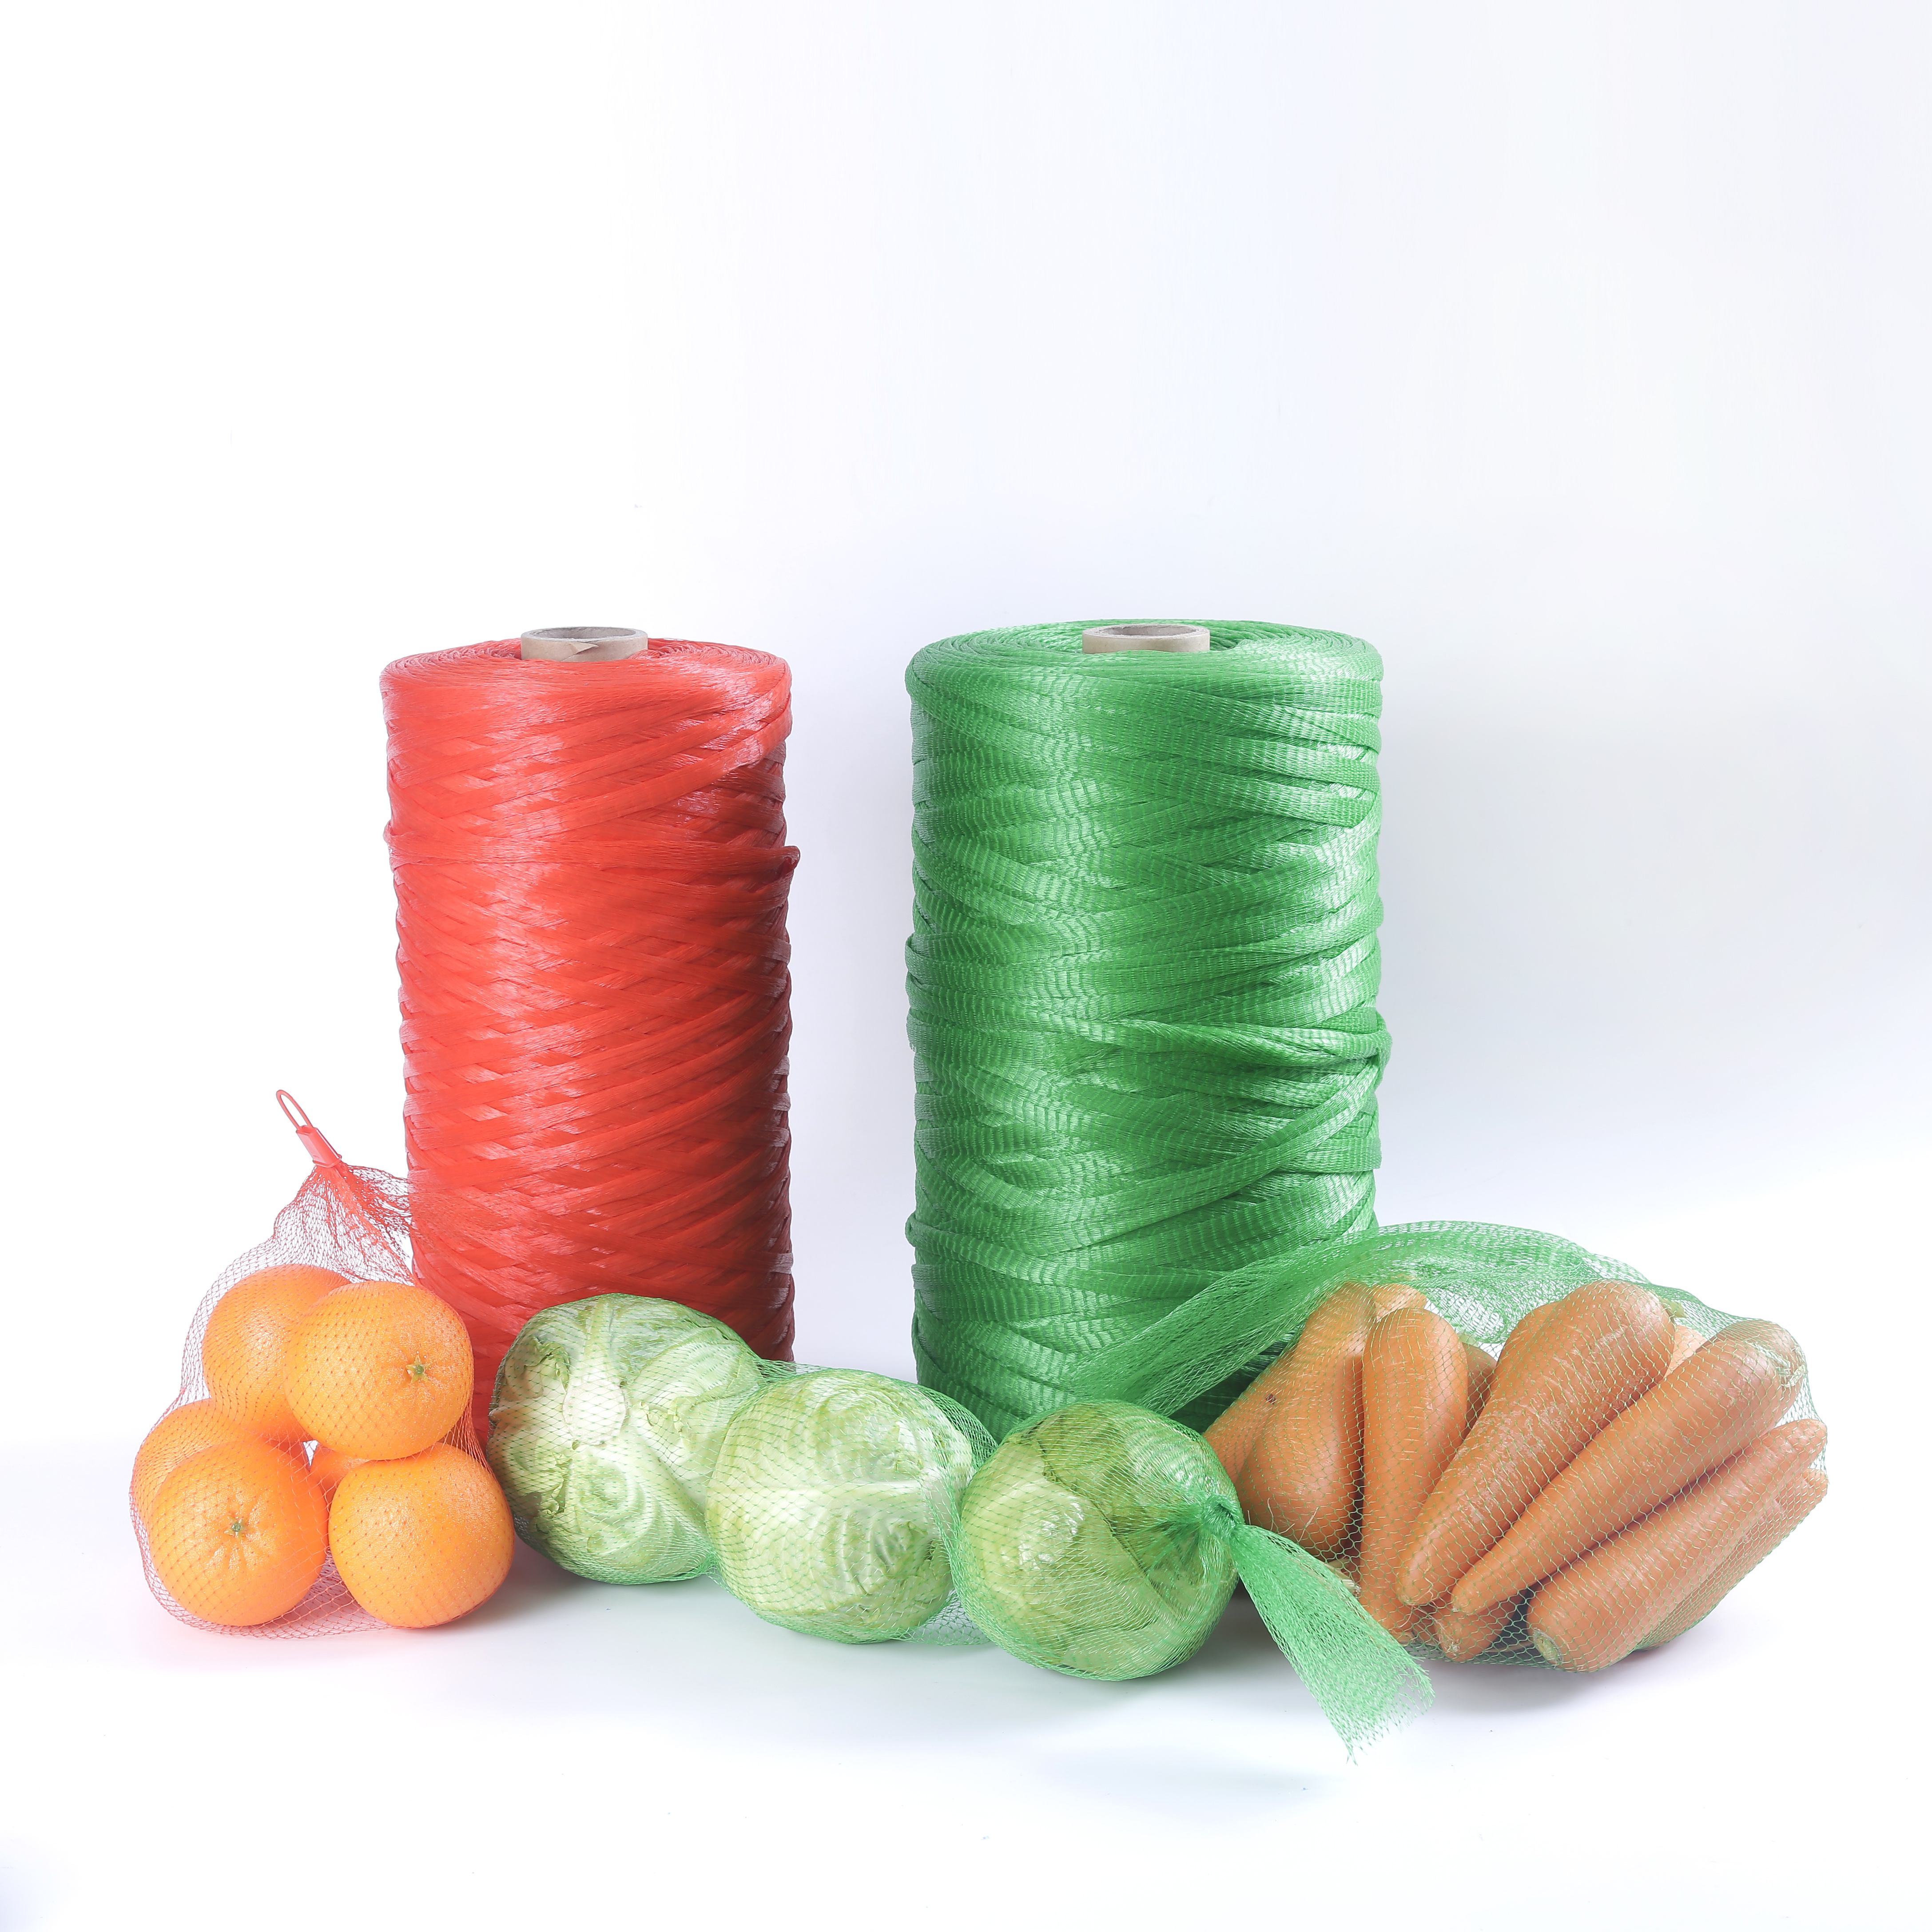 PP شبكة بلاستيكية أنبوبي حقيبة الفاكهة التعبئة صافي حقيبة بلاستيكية واقية شبكة كم صافي